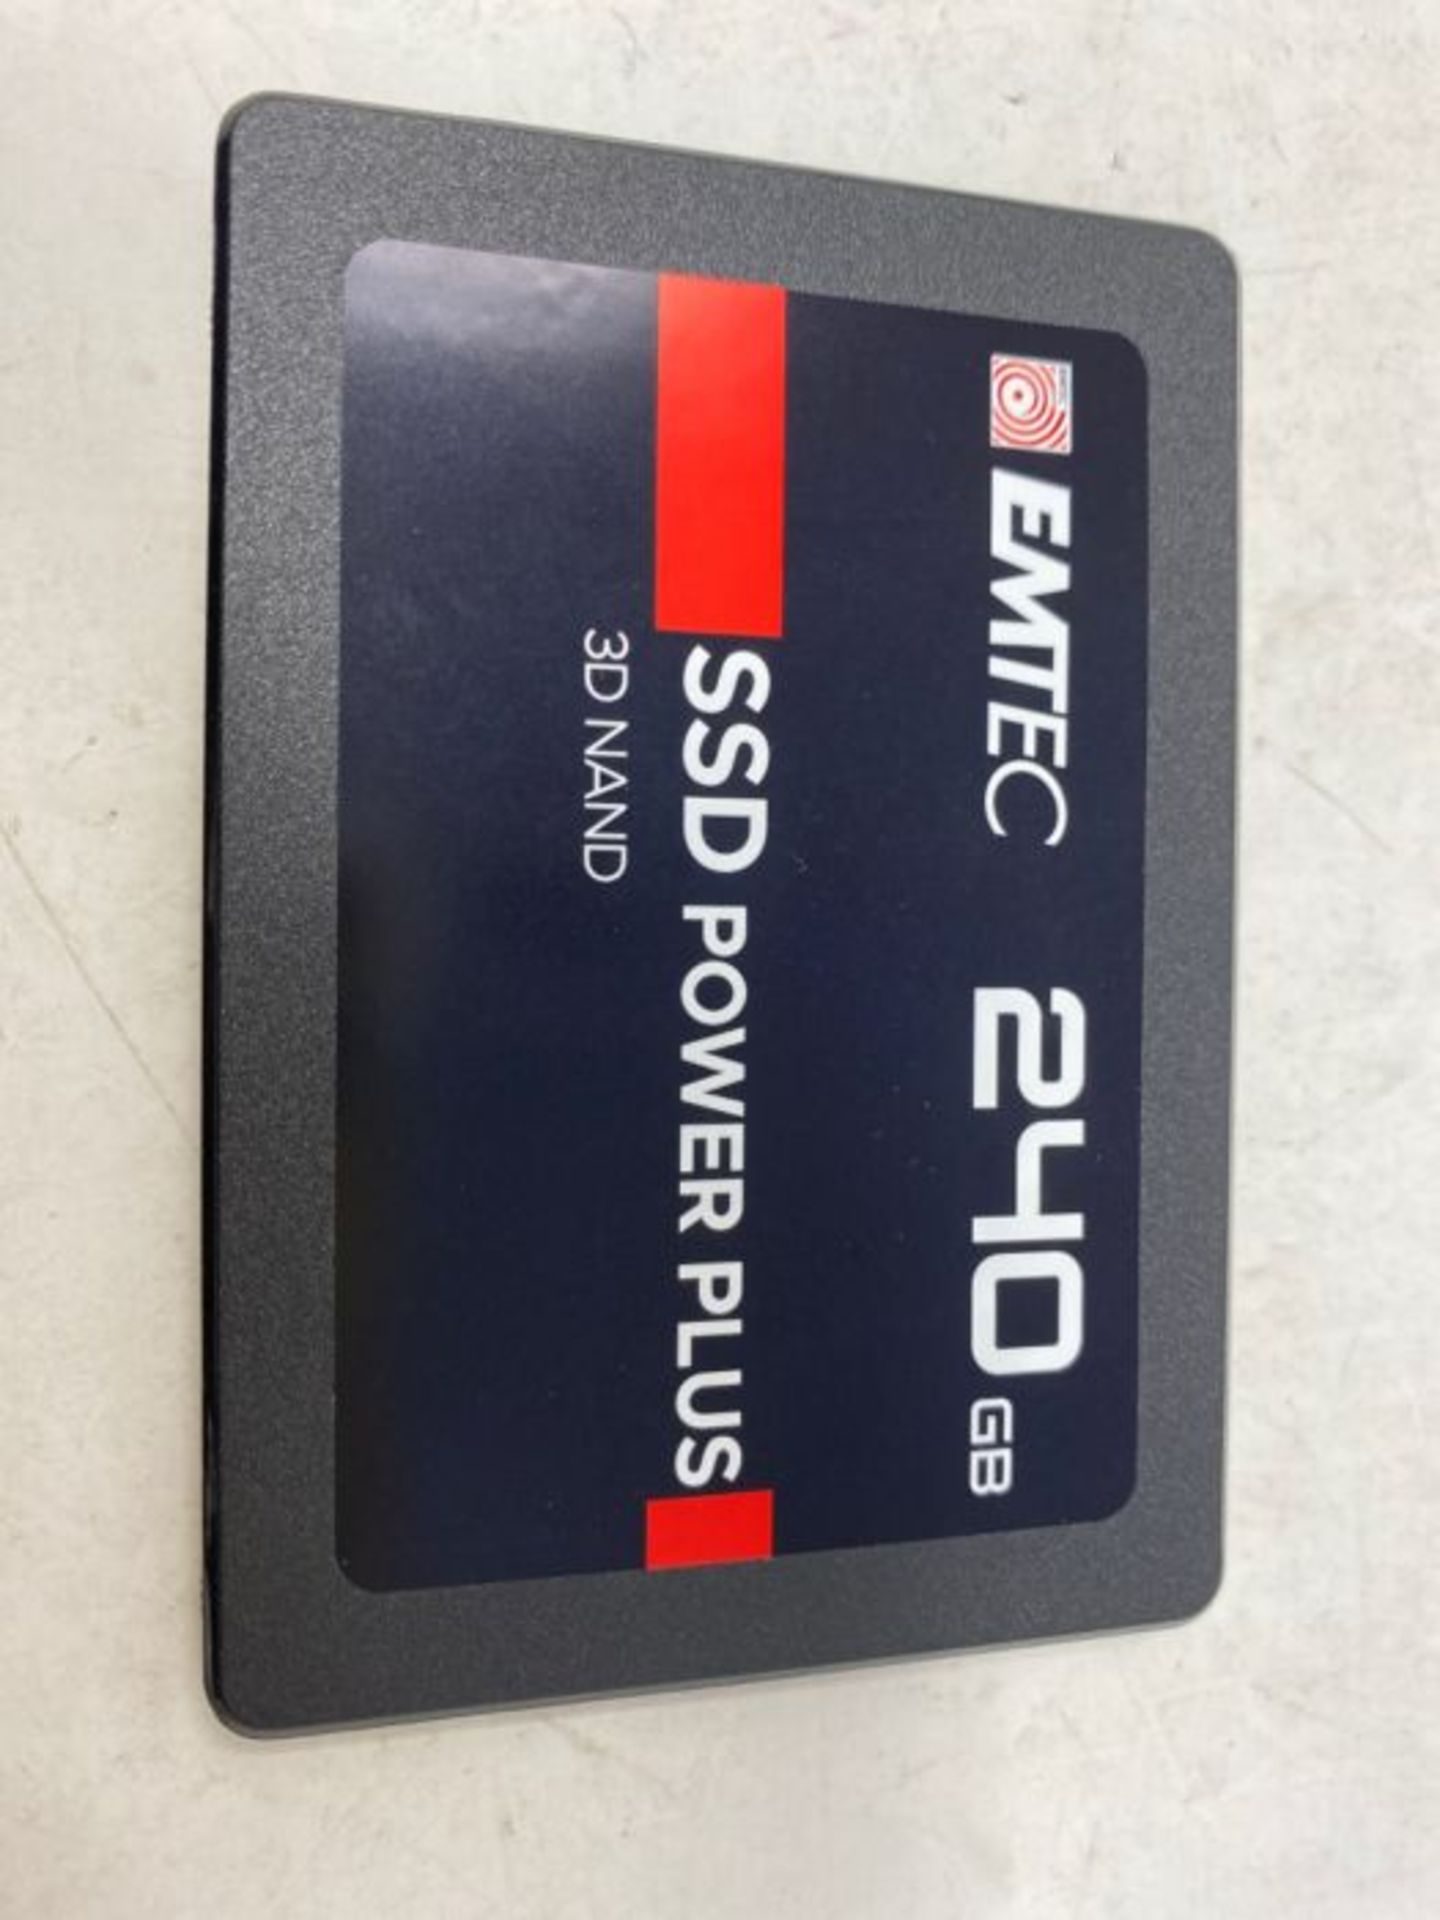 Disque Dur SSD Emtec X150 Power Plus 240Go SATA 2"1/2 - Image 2 of 3